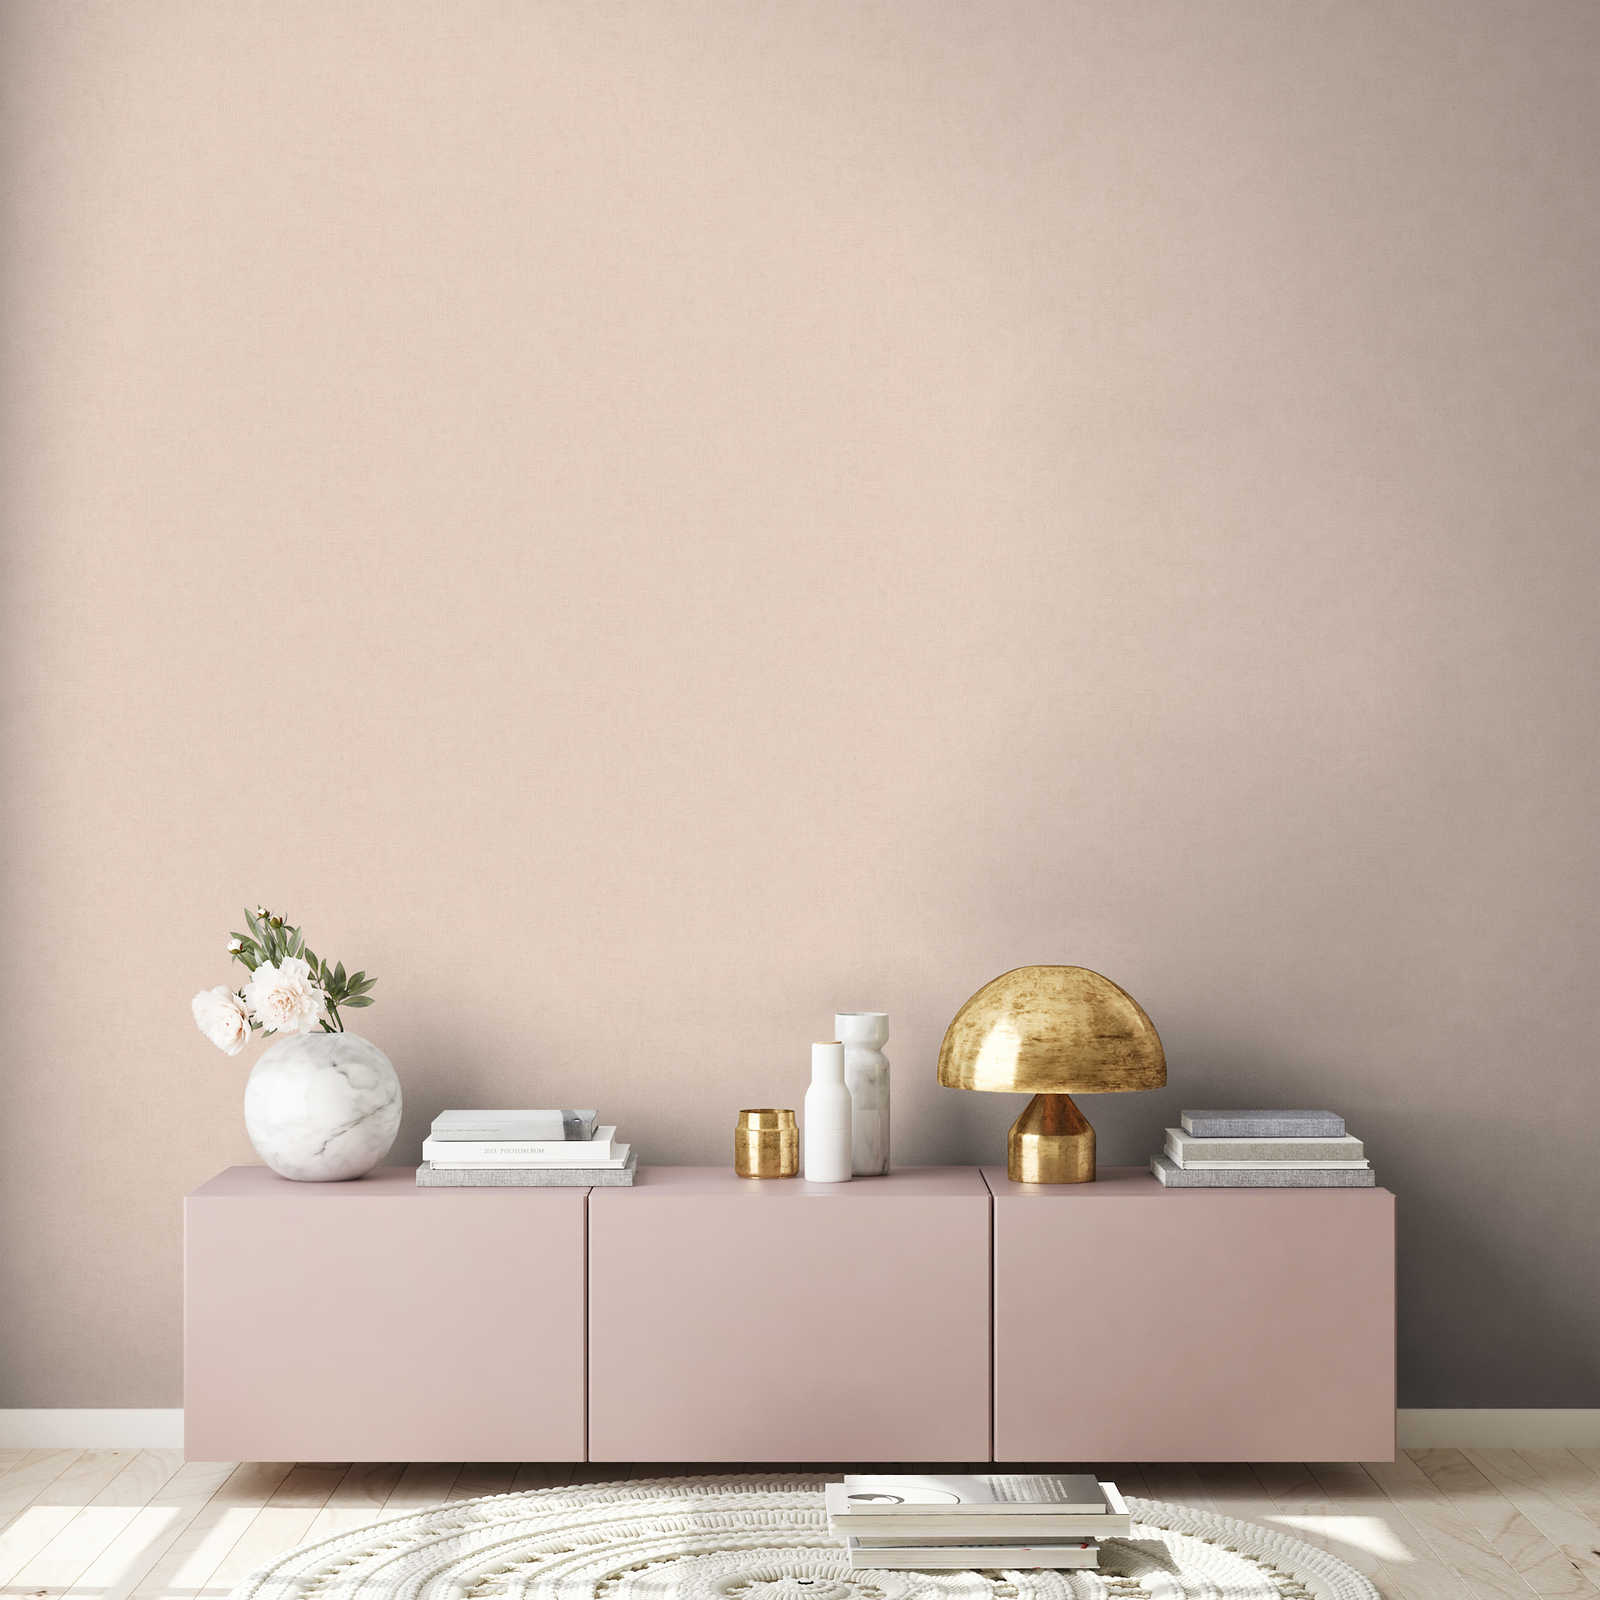             Wallpaper plain with structure embossing & gloss effect - beige, cream, metallic
        